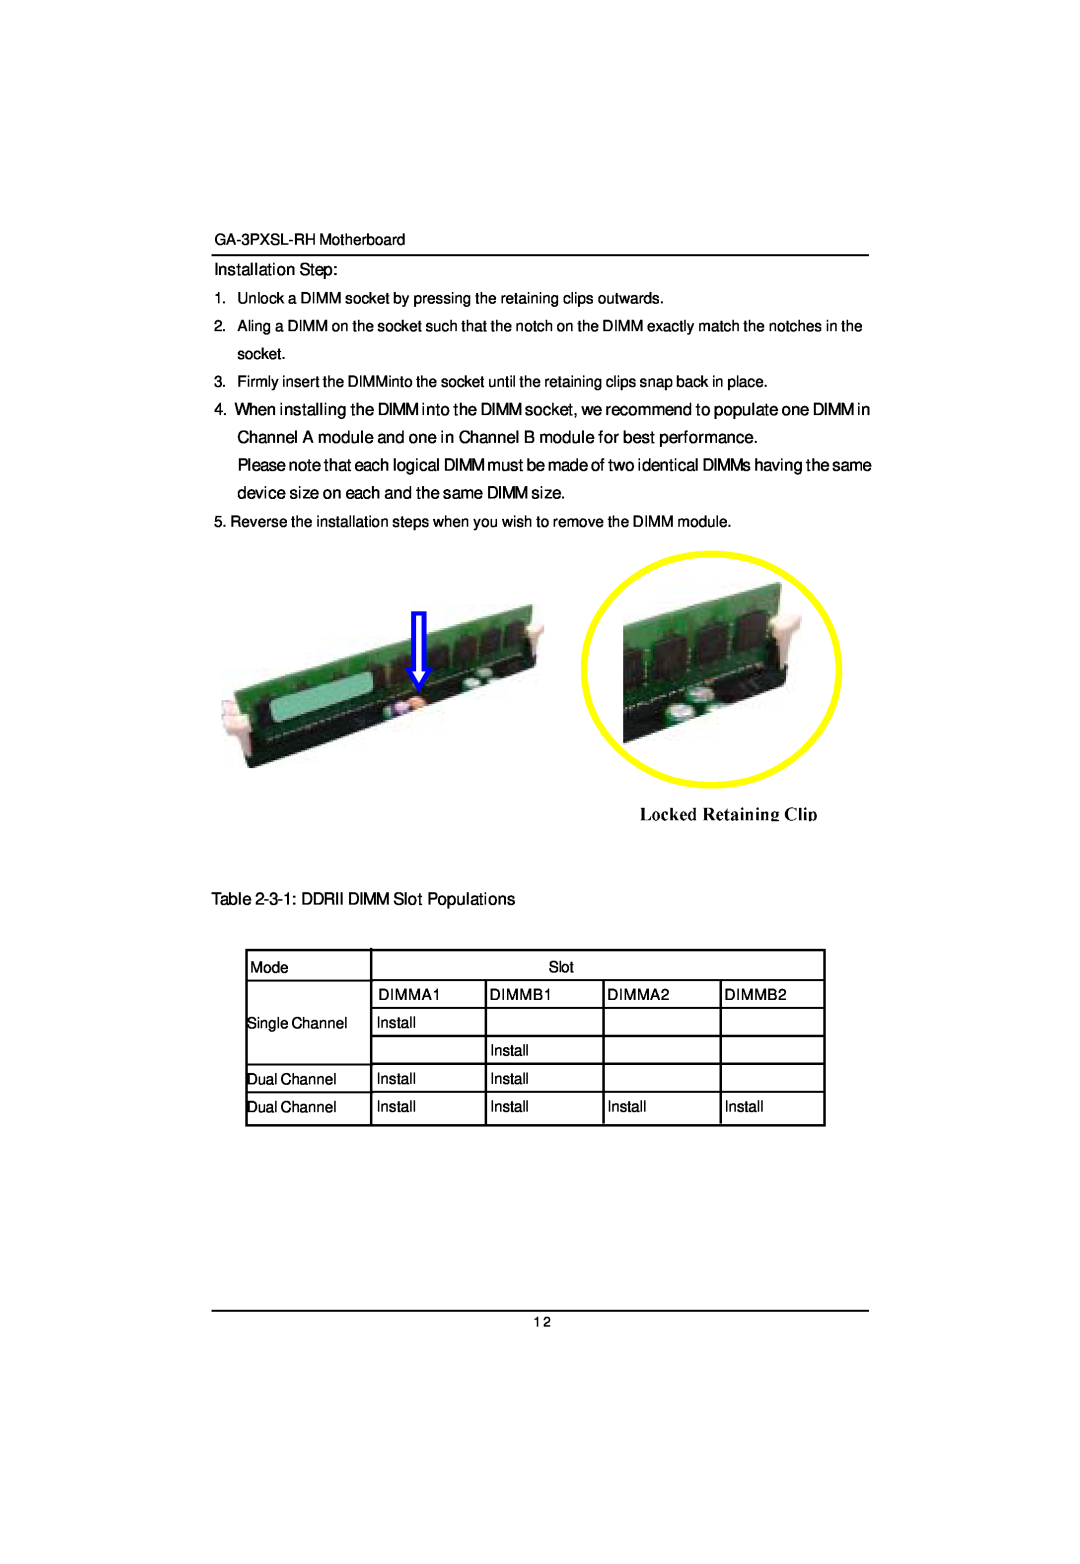 Gigabyte GA-3PXSL-RH user manual Installation Step, 3-1 DDRII DIMM Slot Populations, Single Channel 